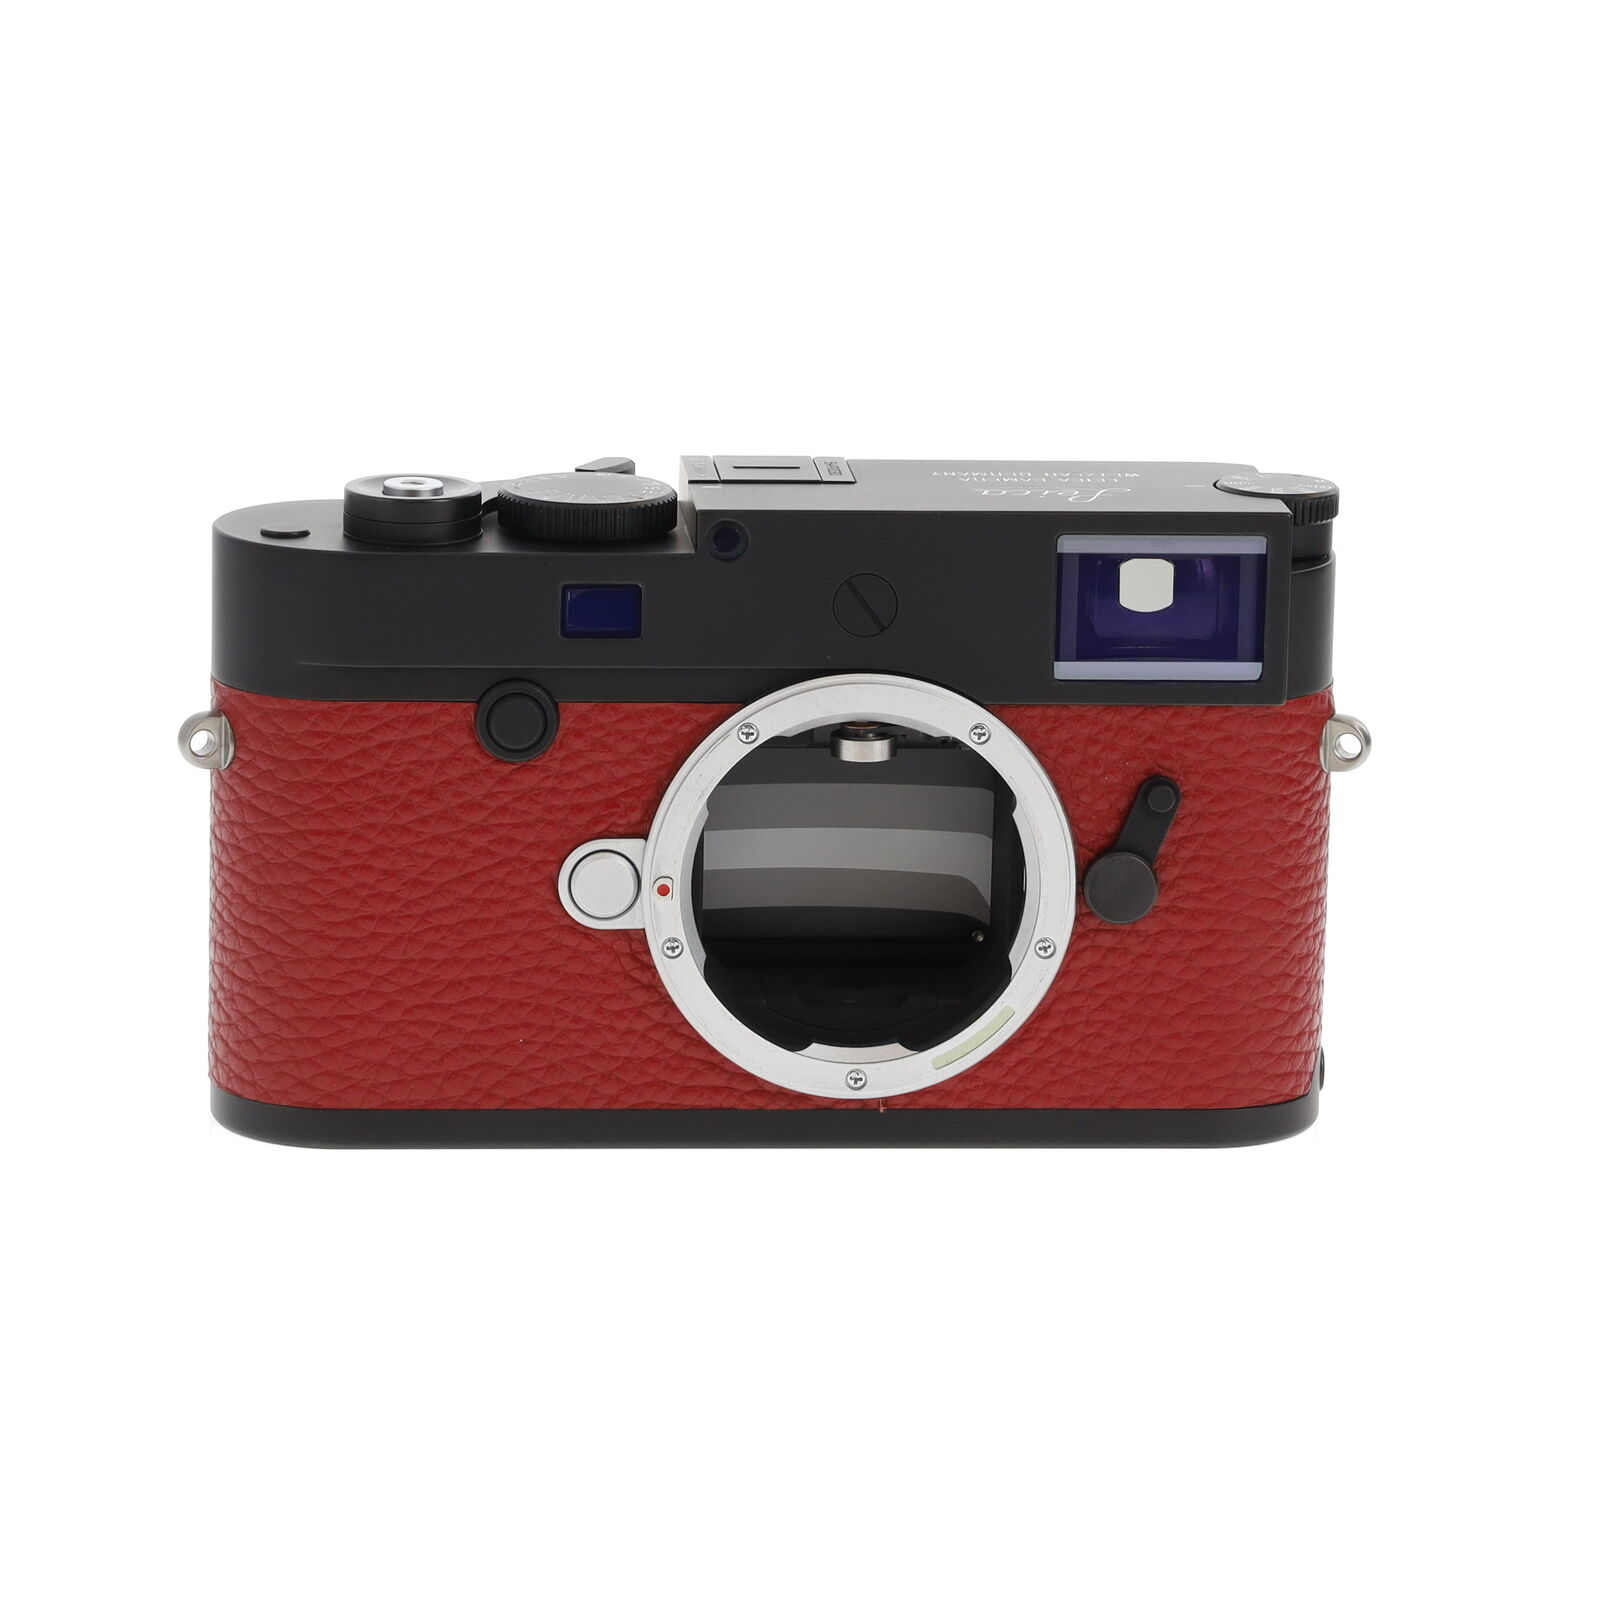 Leica M10-D (Type No.9217) Digital Rangefinder Camera Body (24MP)